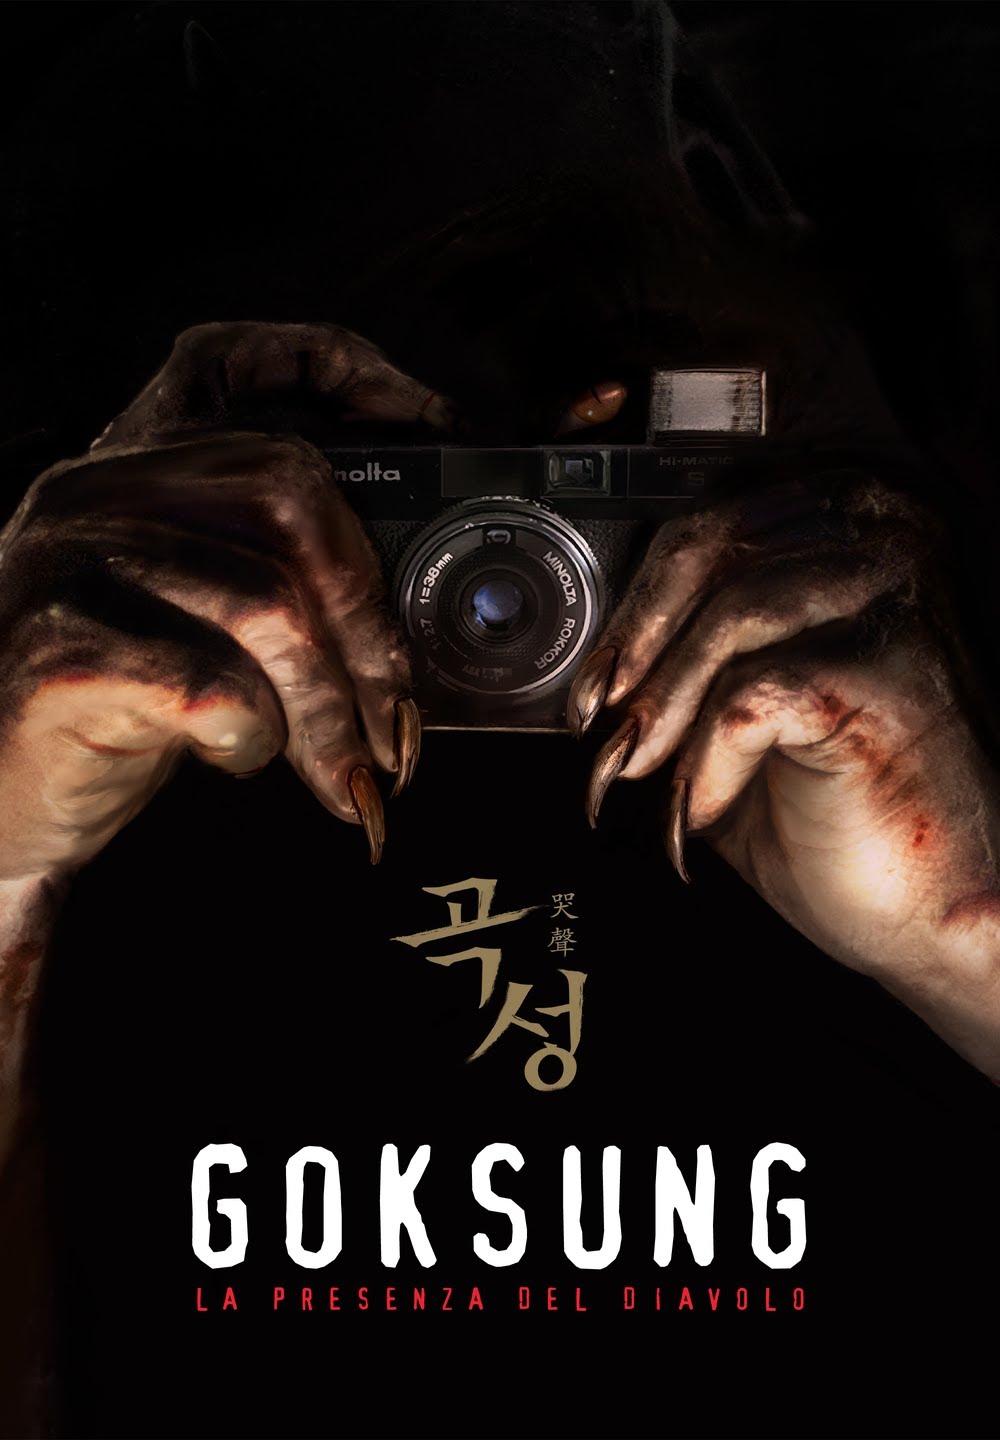 Goksung – La presenza del diavolo [HD] (2016)﻿